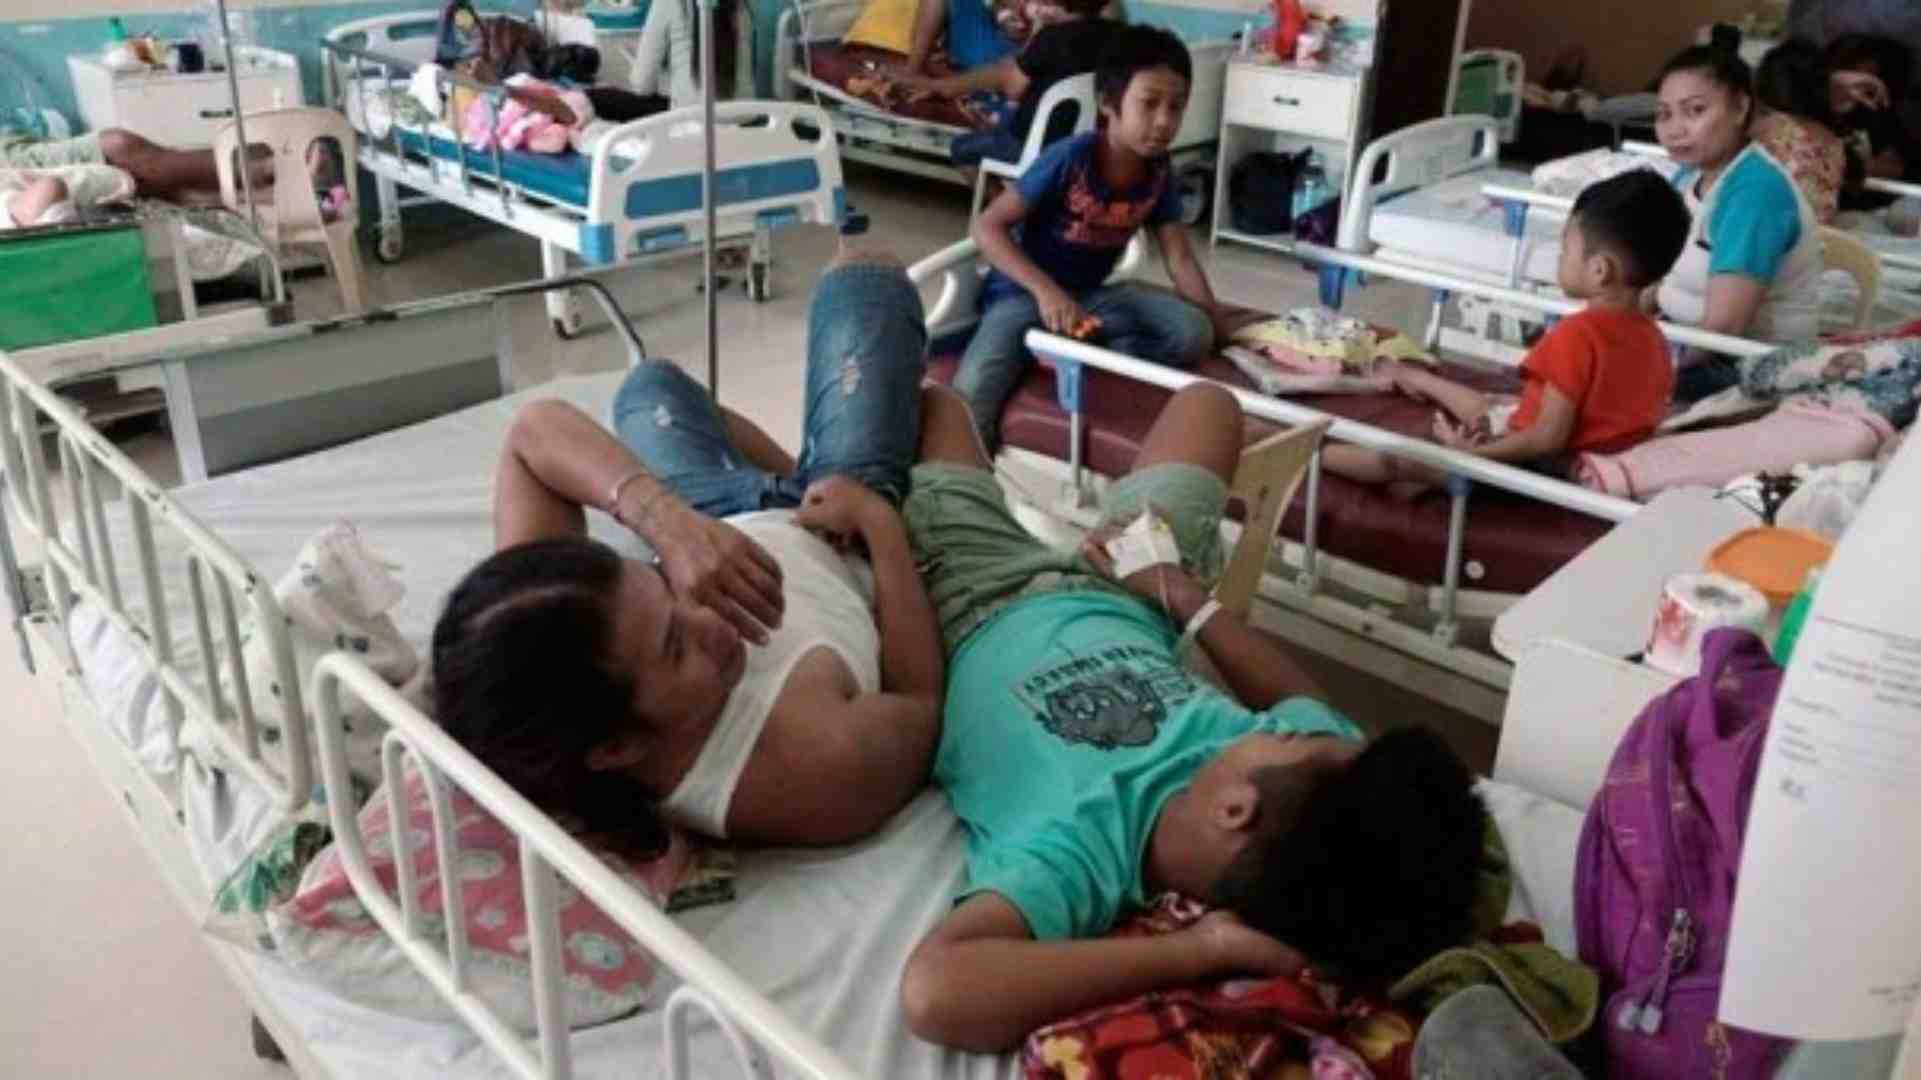 Filipinas epidemia dengue